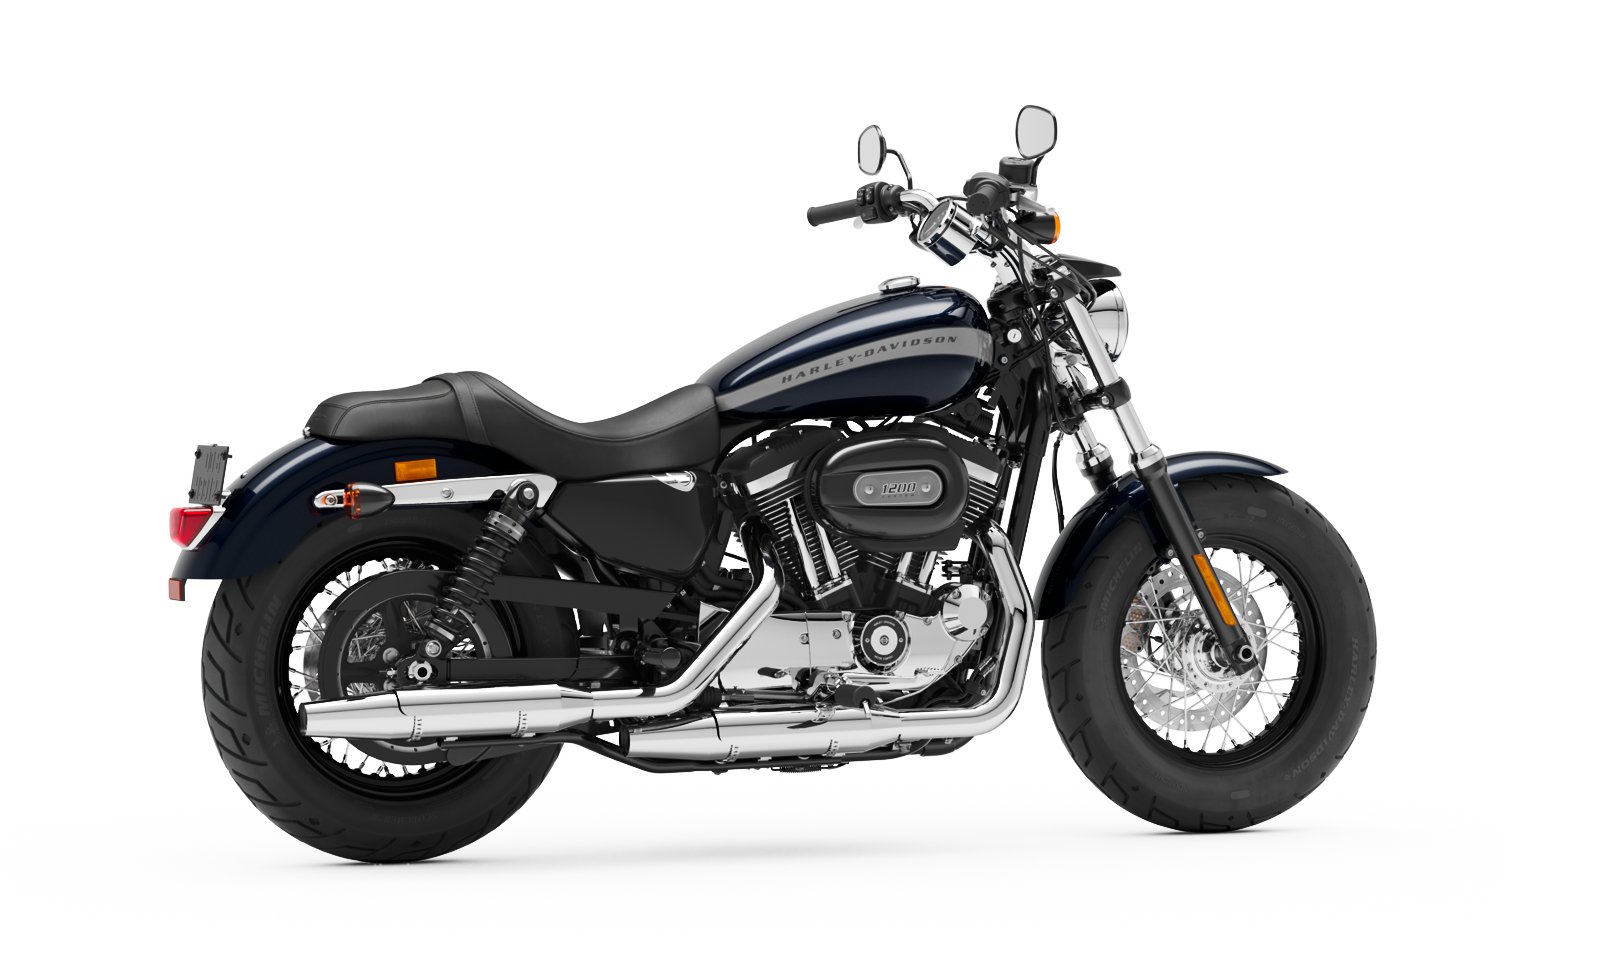 2020 Harley Davidson 1200 Custom Motorcycle Harley Davidson Asia Pacific Markets